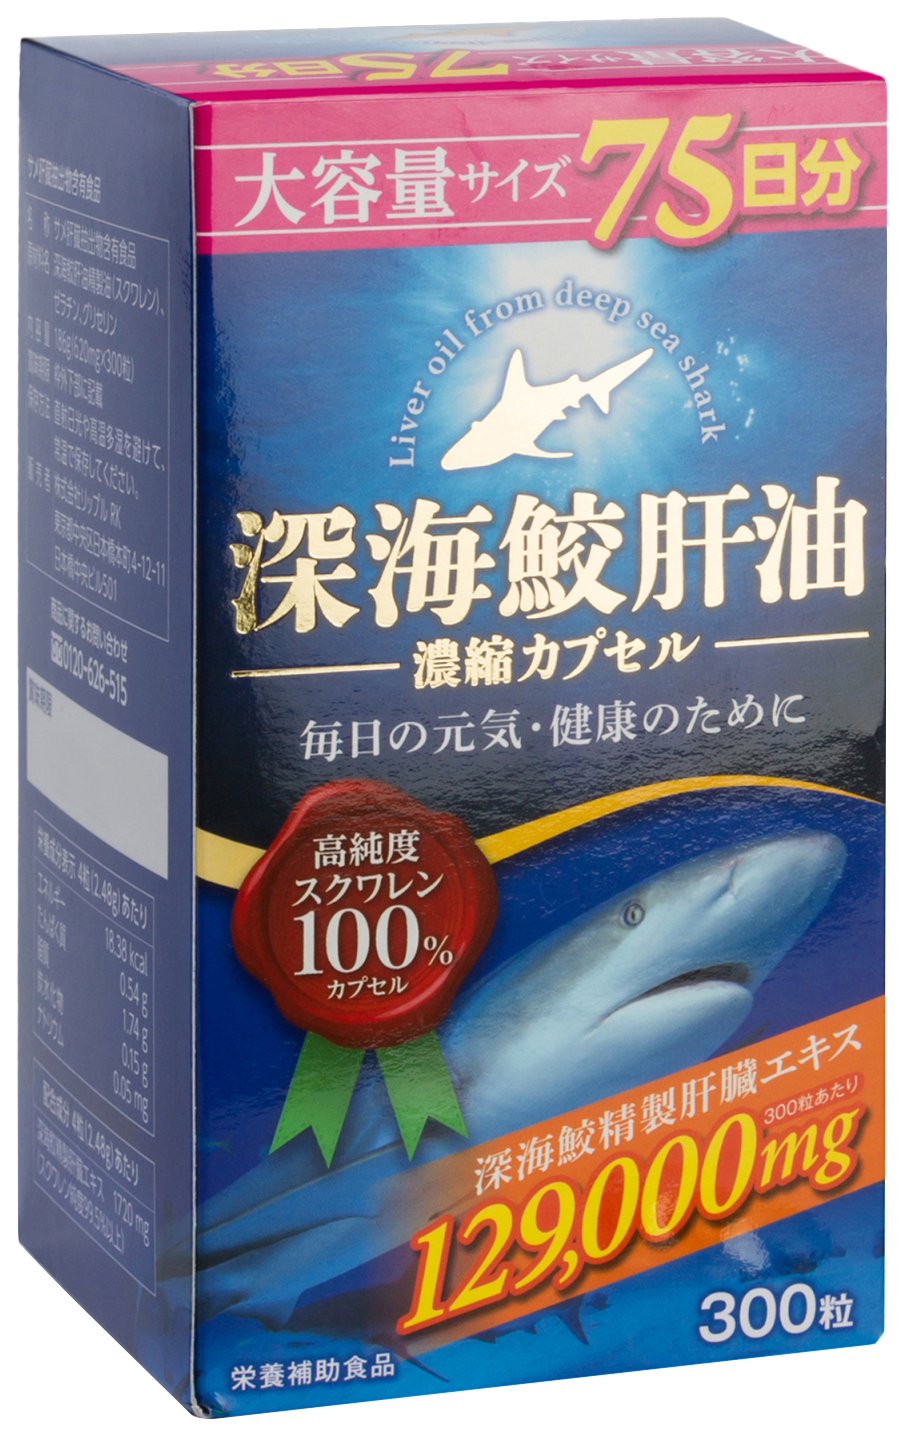 Сквален для чего нужен организму. Акулий сквален Orihiro капсулы. Инфинити сквален. Сквален капсулы. Японский препарат сквален.